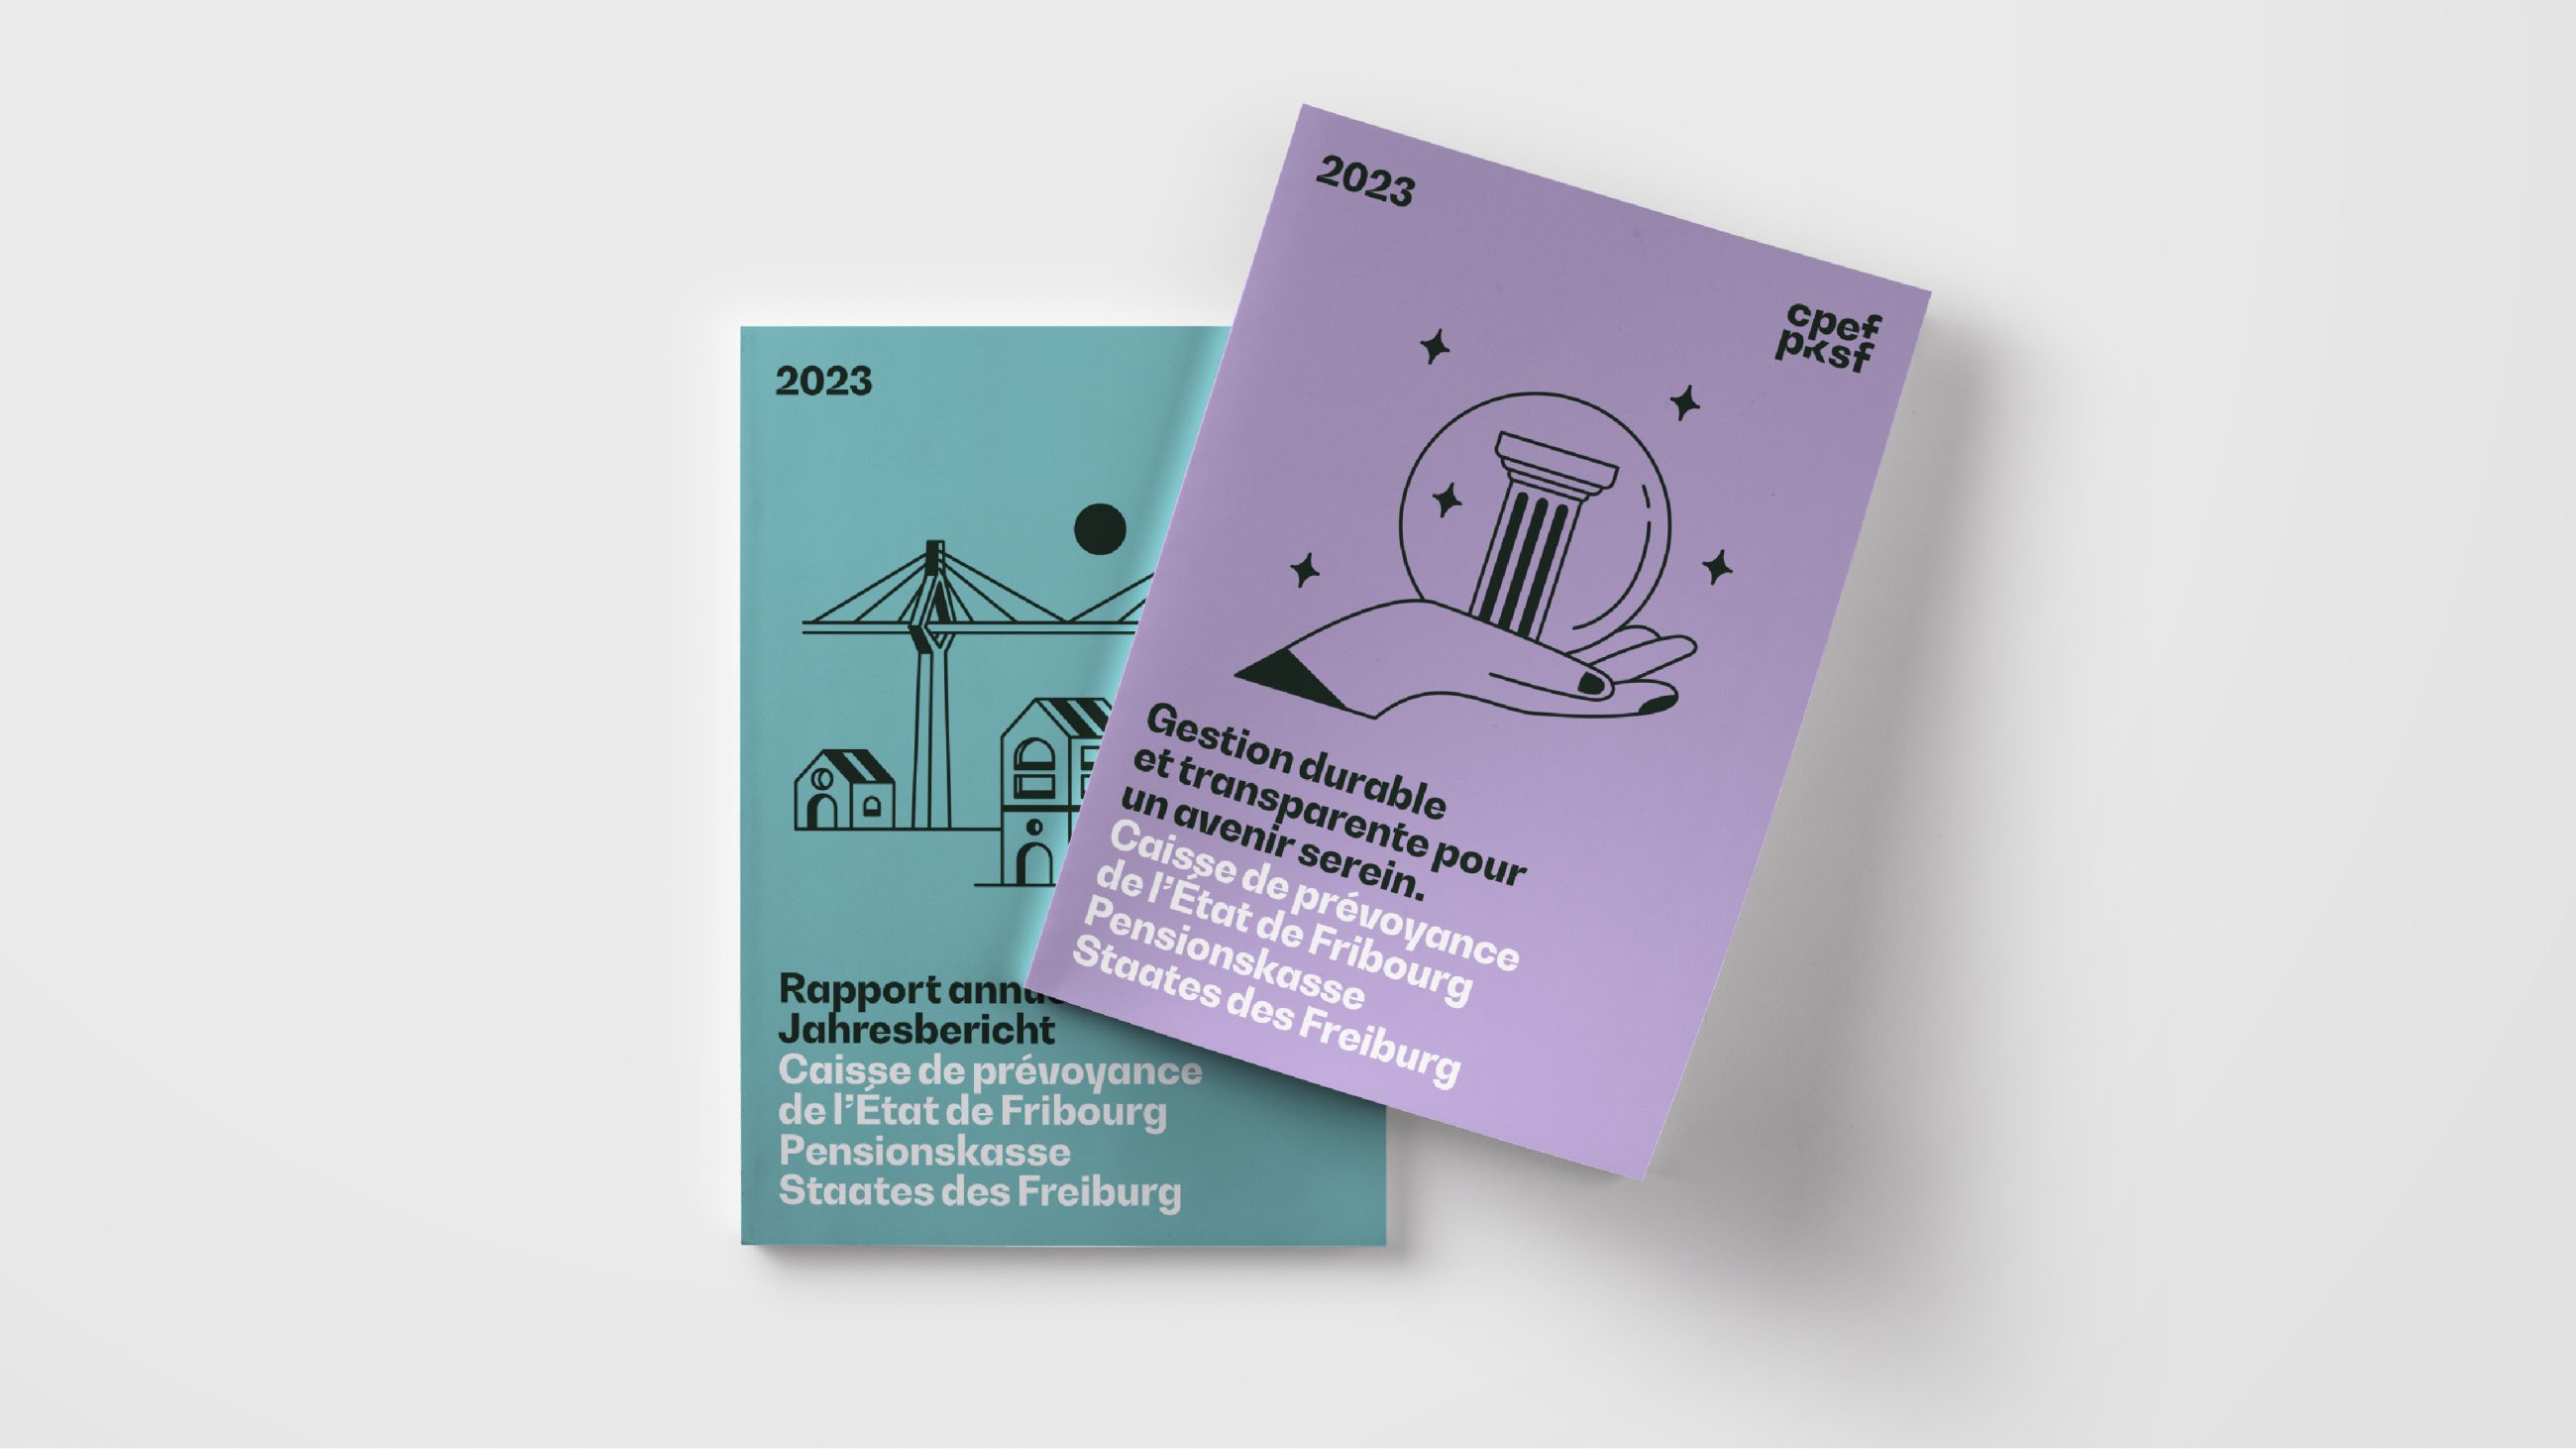 CPEF PKSF Fribourg papeterie brochure Design